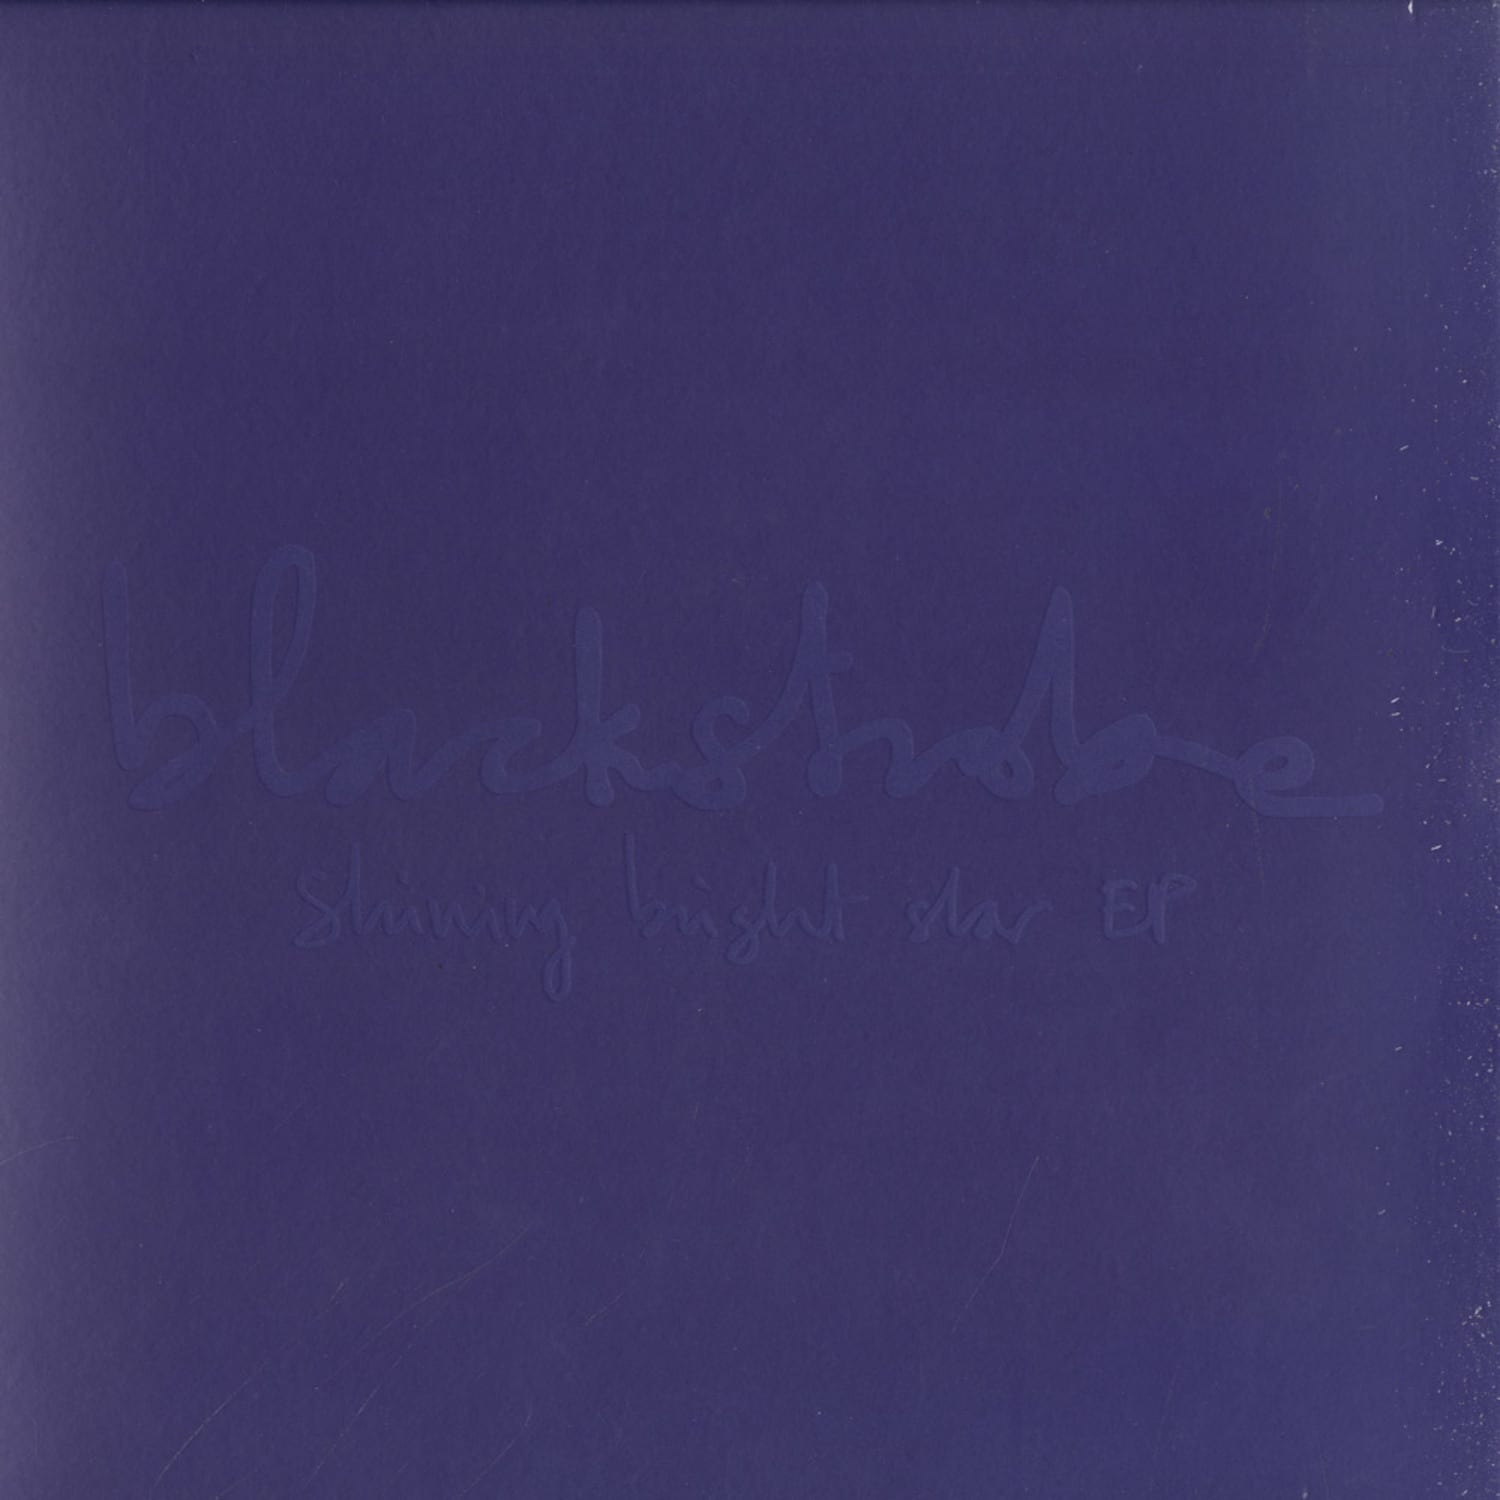 Black Strobe - SHINING BRIGHT STAR EP